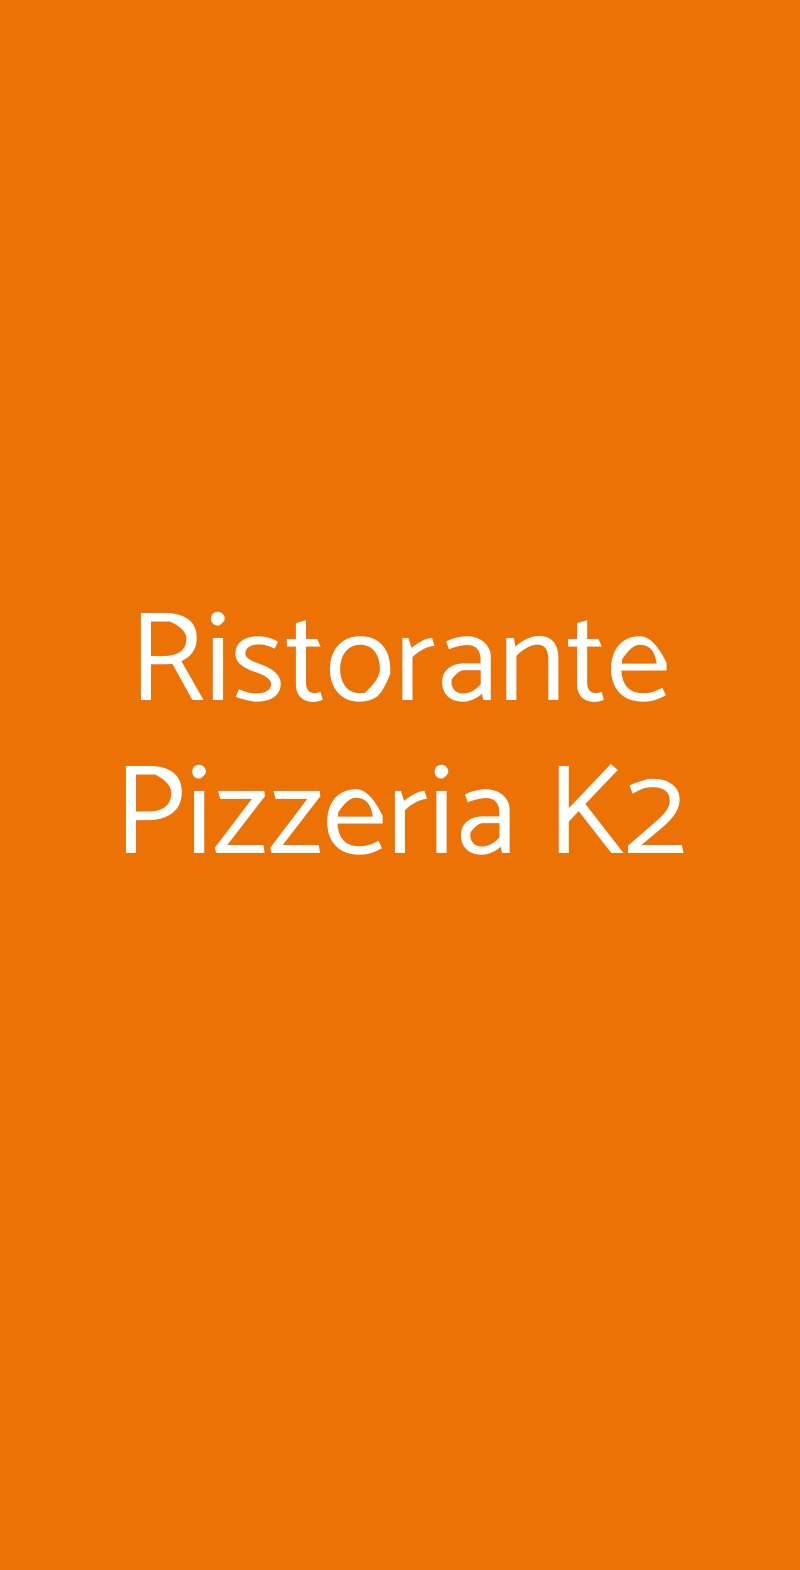 Ristorante Pizzeria K2 Lucca menù 1 pagina